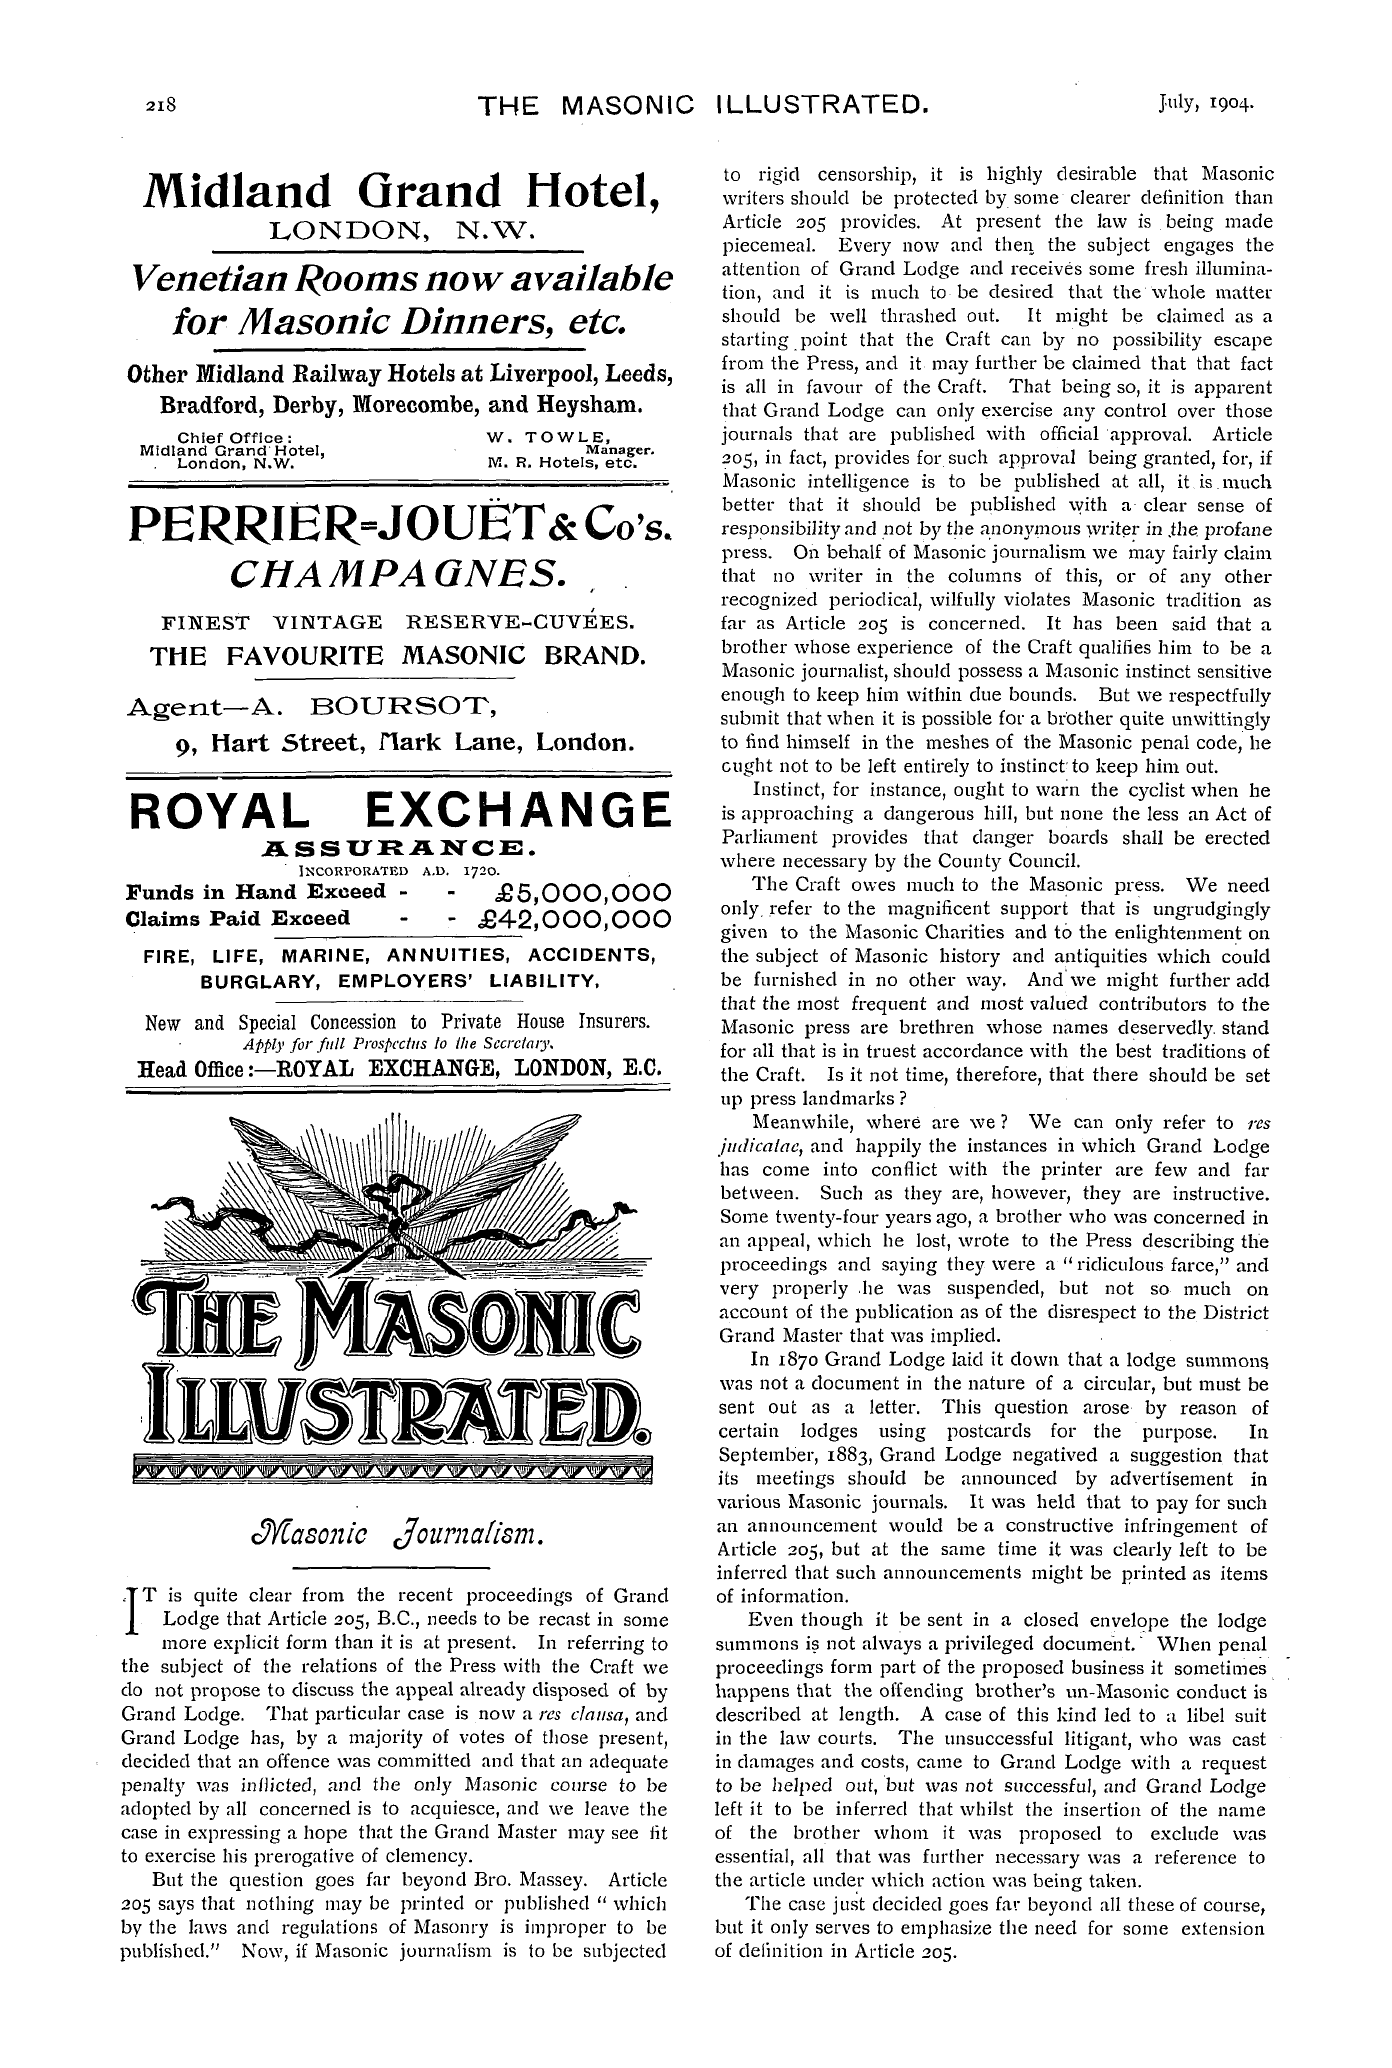 The Masonic Illustrated: 1904-07-01: 12